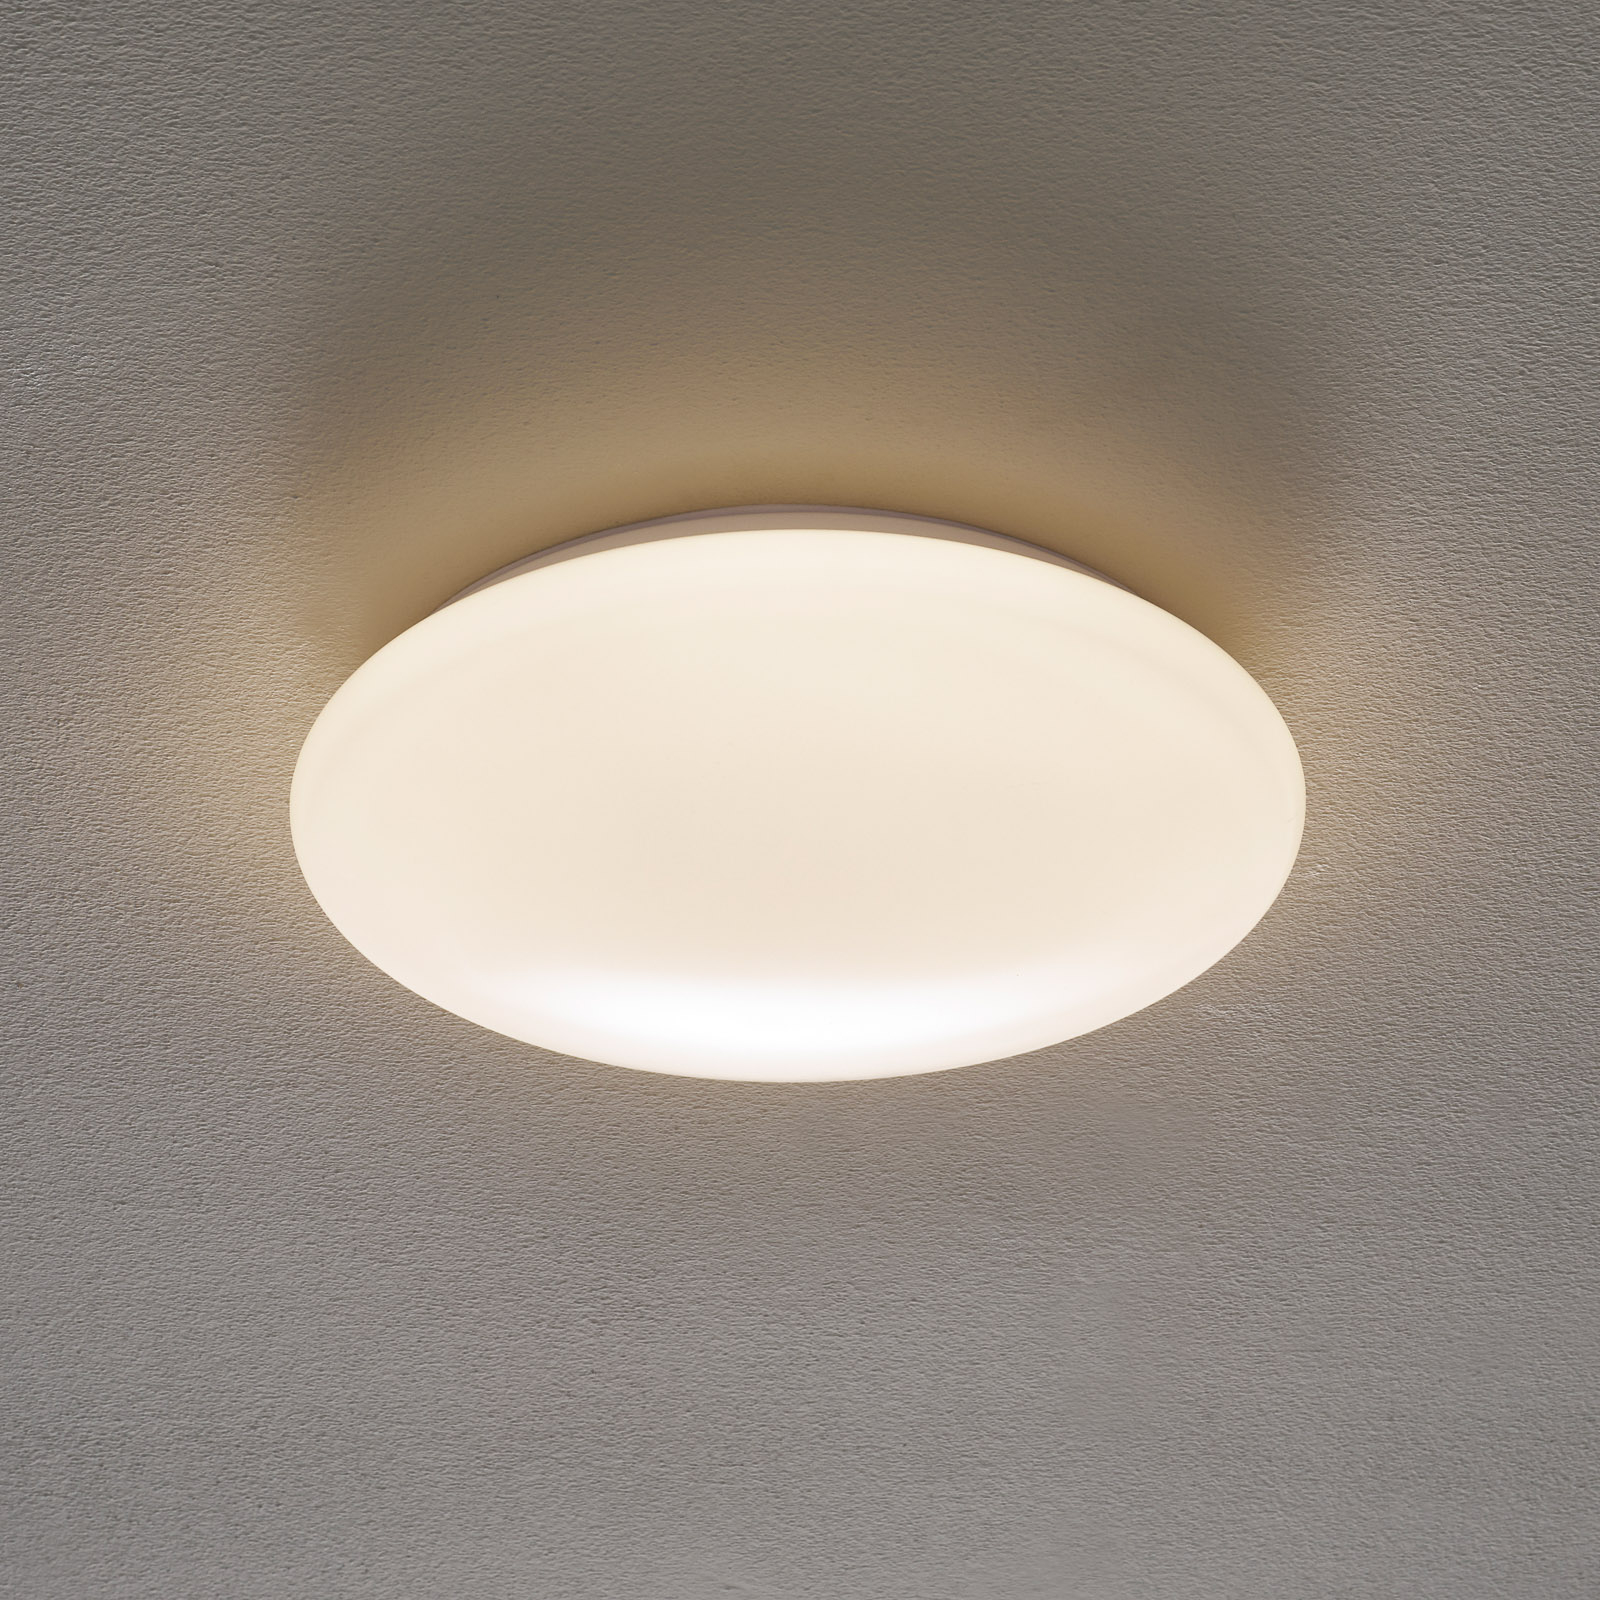 Altona LED ceiling light Ø 33,7 cm 1.450 lm 3,000K